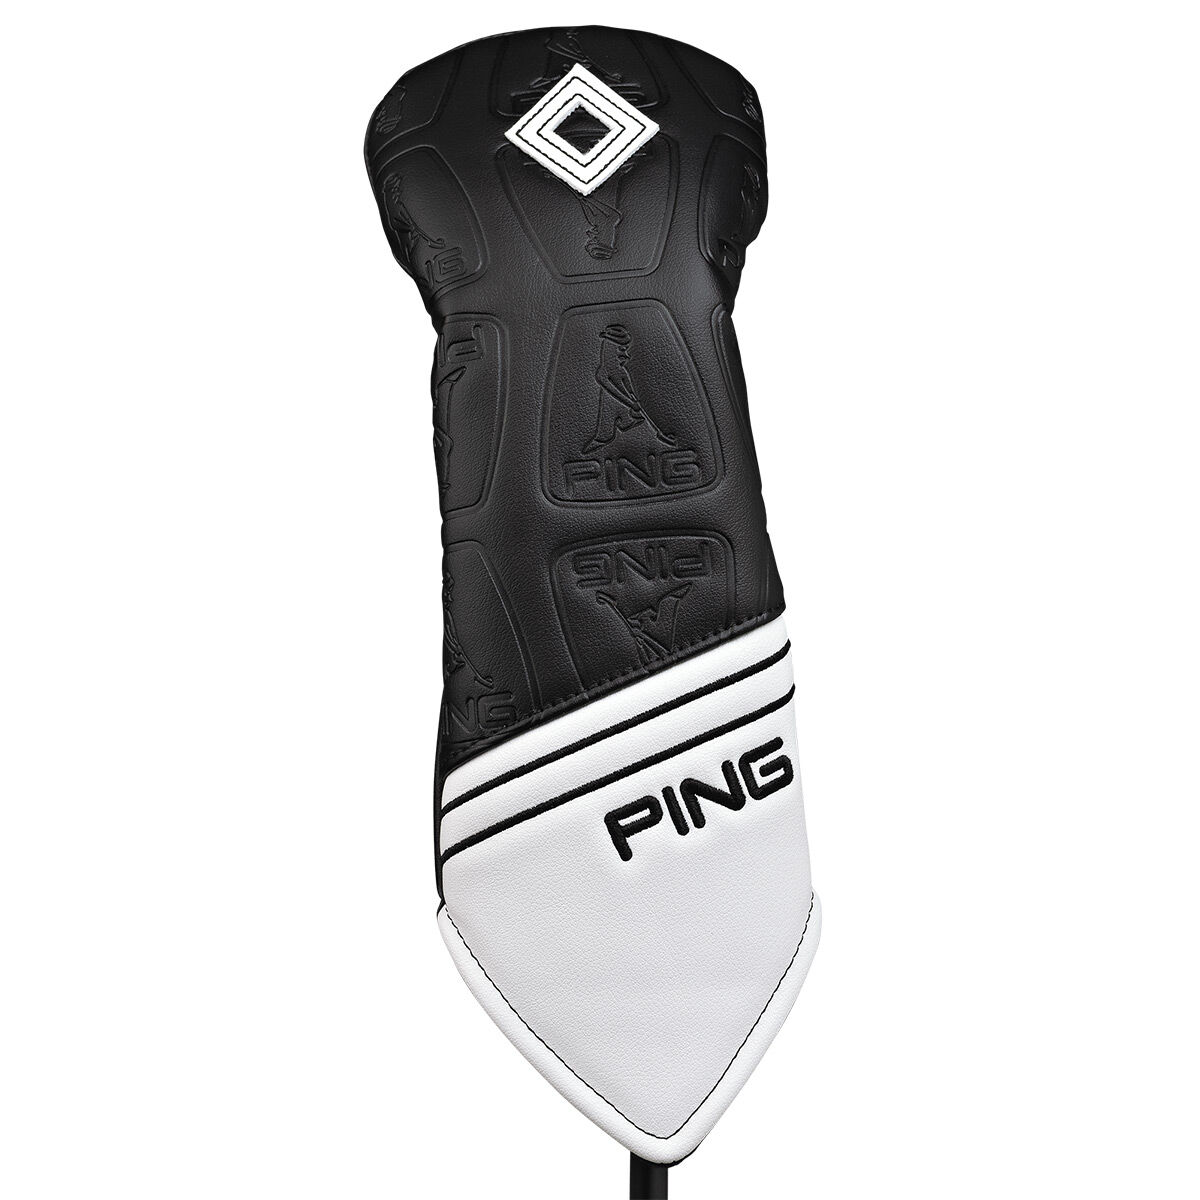 PING Core 214 Golf Fairway Wood Head Cover, White/black | American Golf von Ping